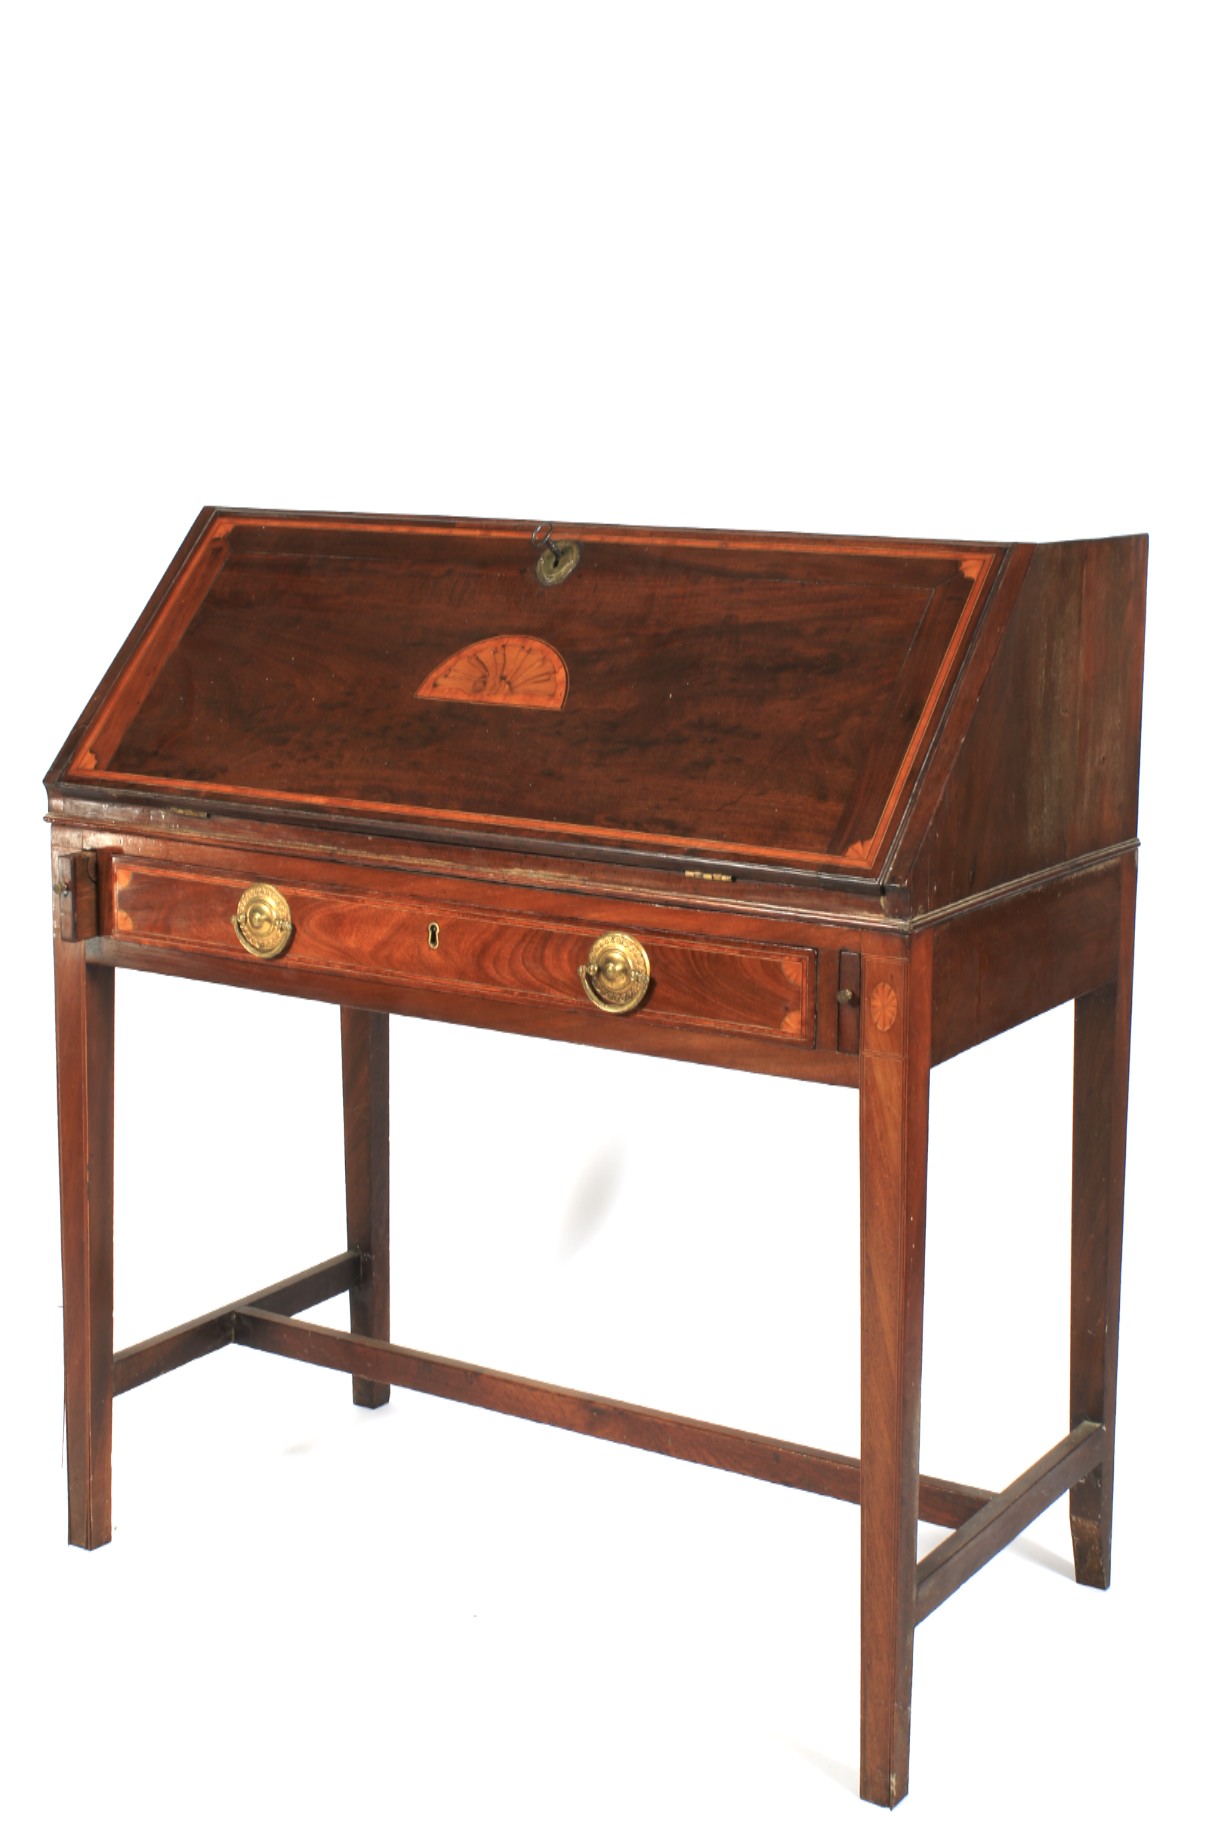 A 19th century mahogany inlaid Sheraton desk on stand.